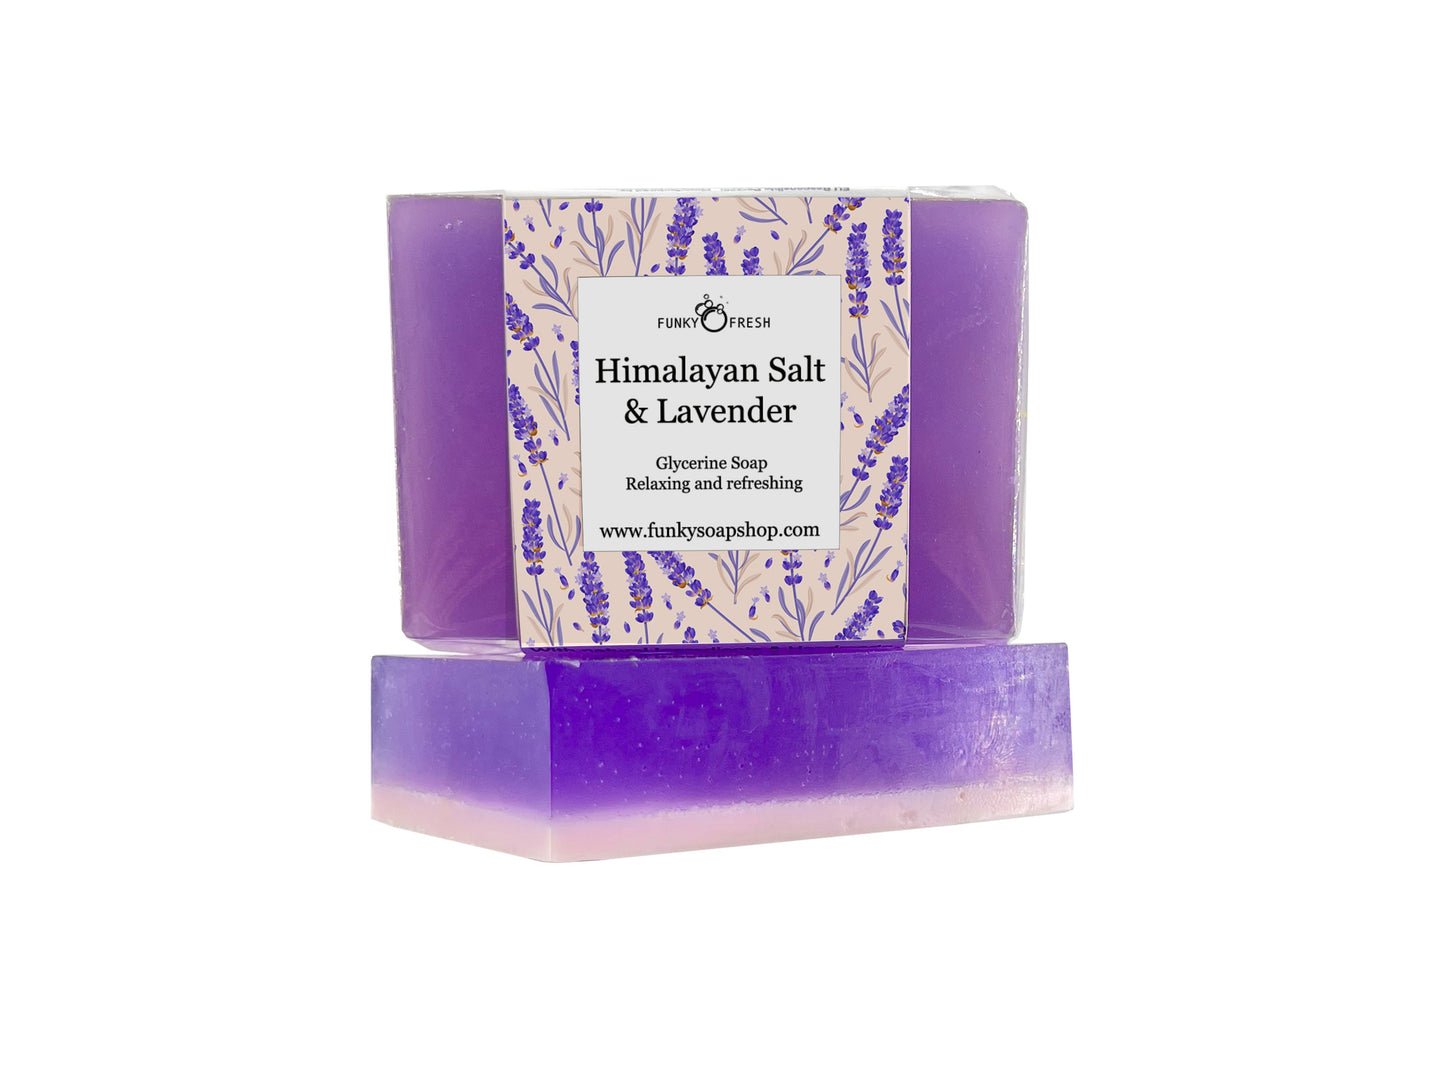 Himalayan Salt & Lavender Glycerine Soap - Funky Soap Shop